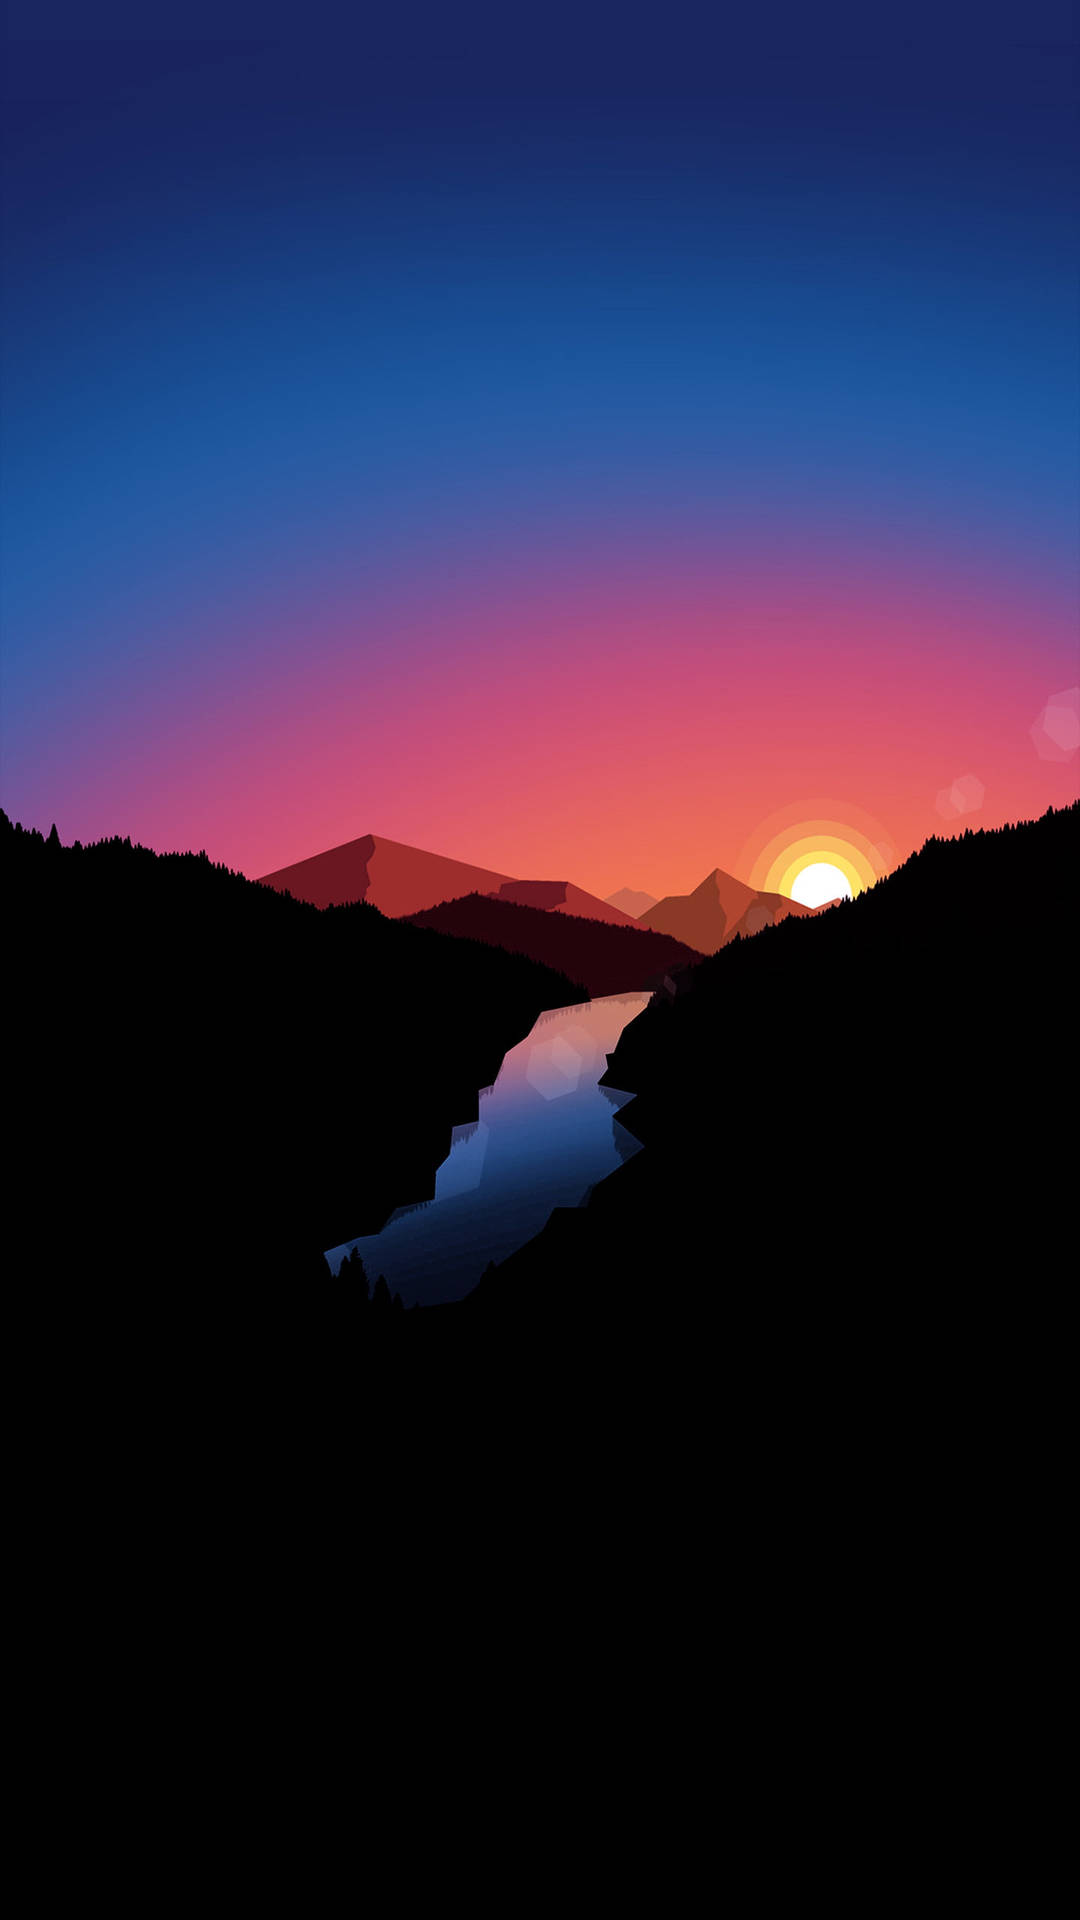 Stunning Landscape Captured On Oled Phone Screen Background